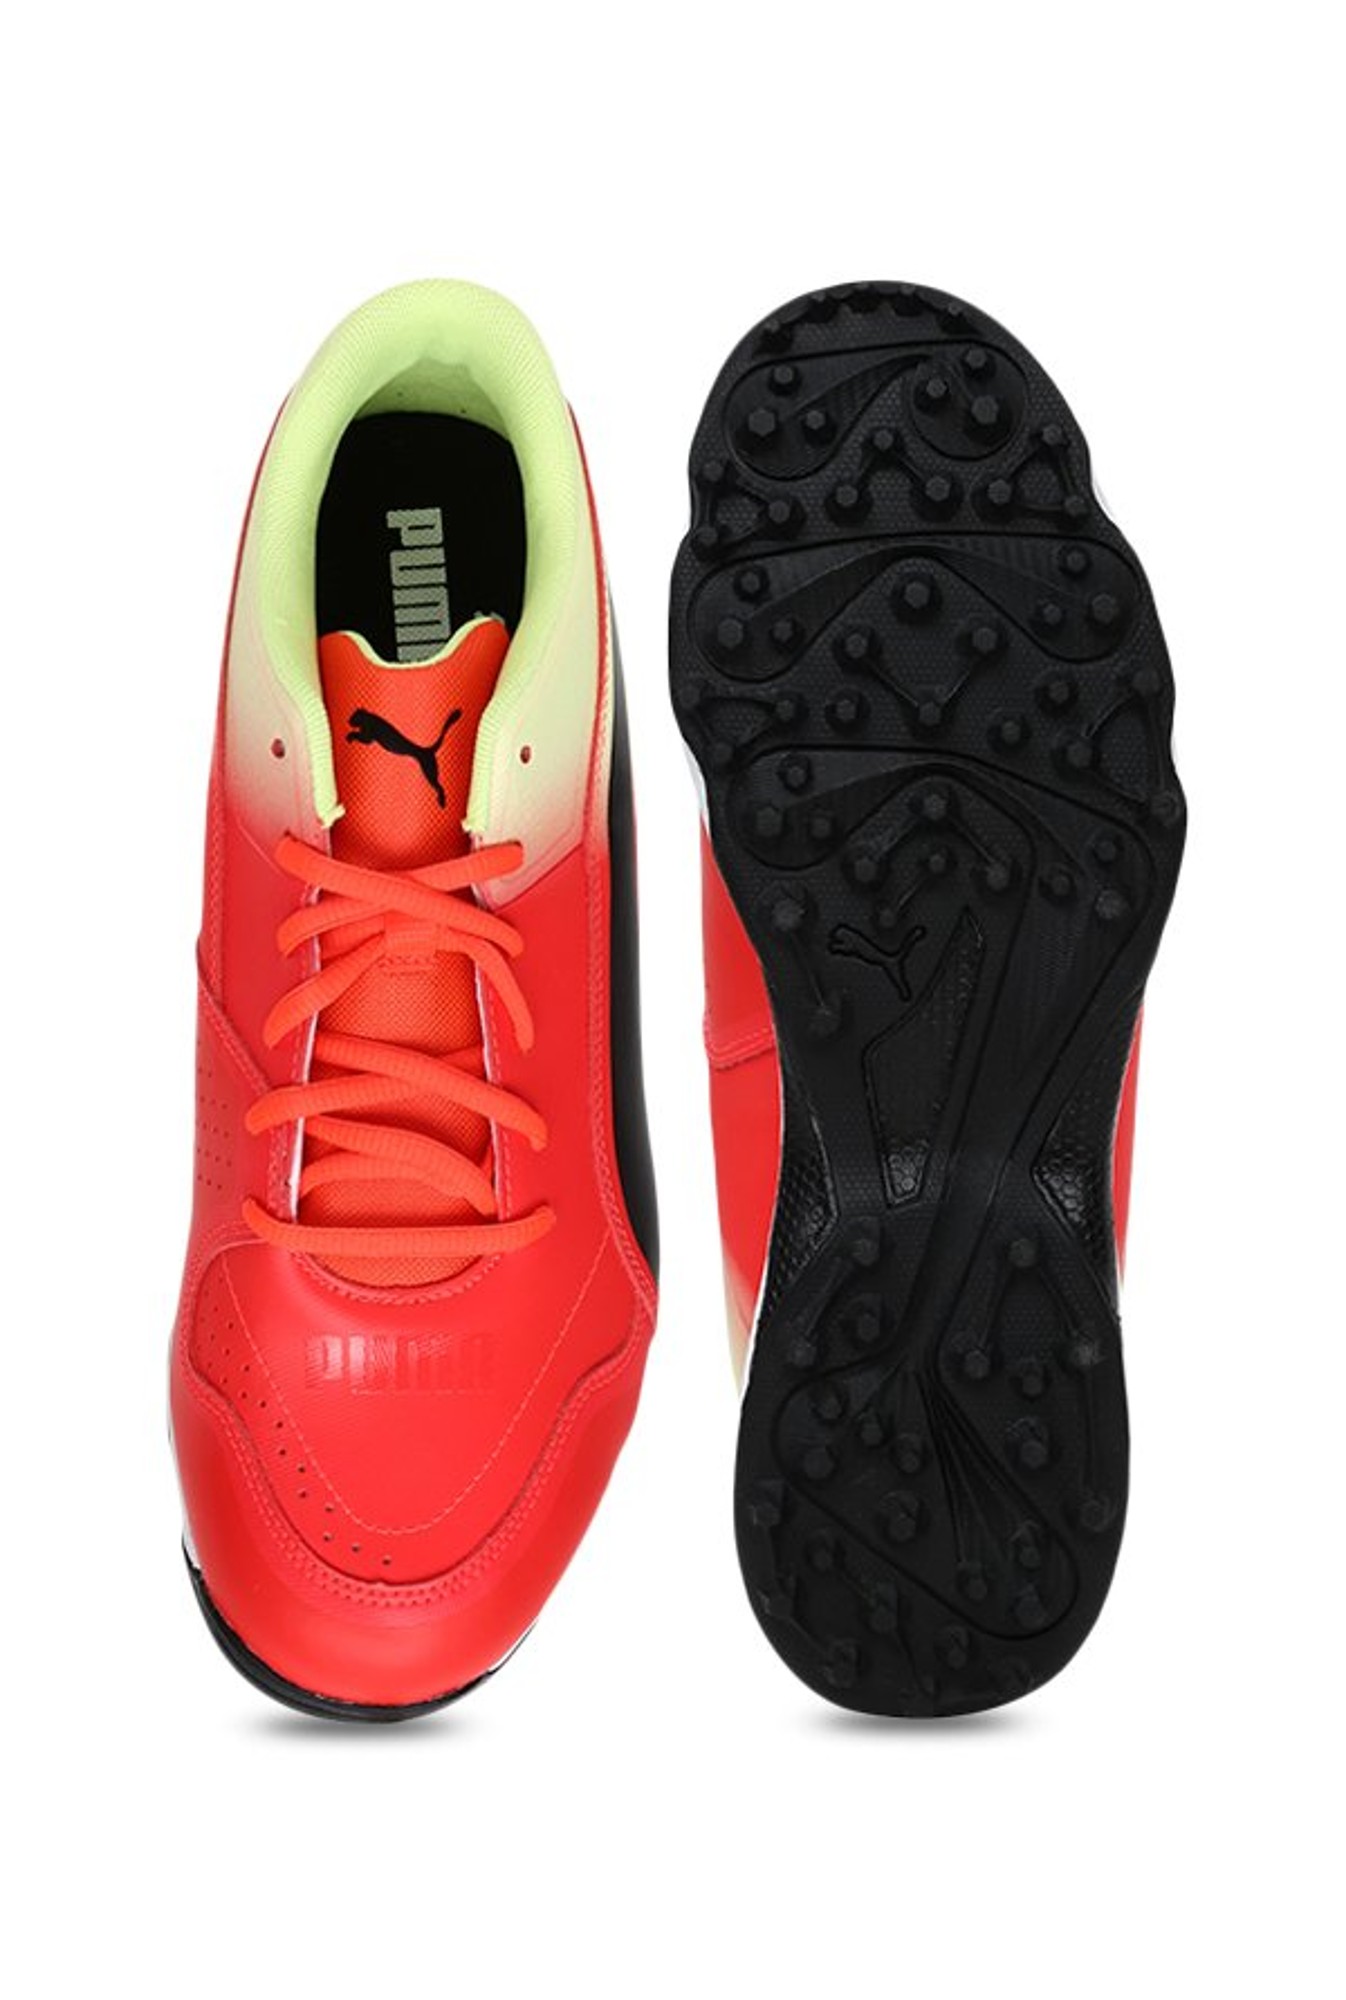 puma evospeed one8 r fade red cricket shoes